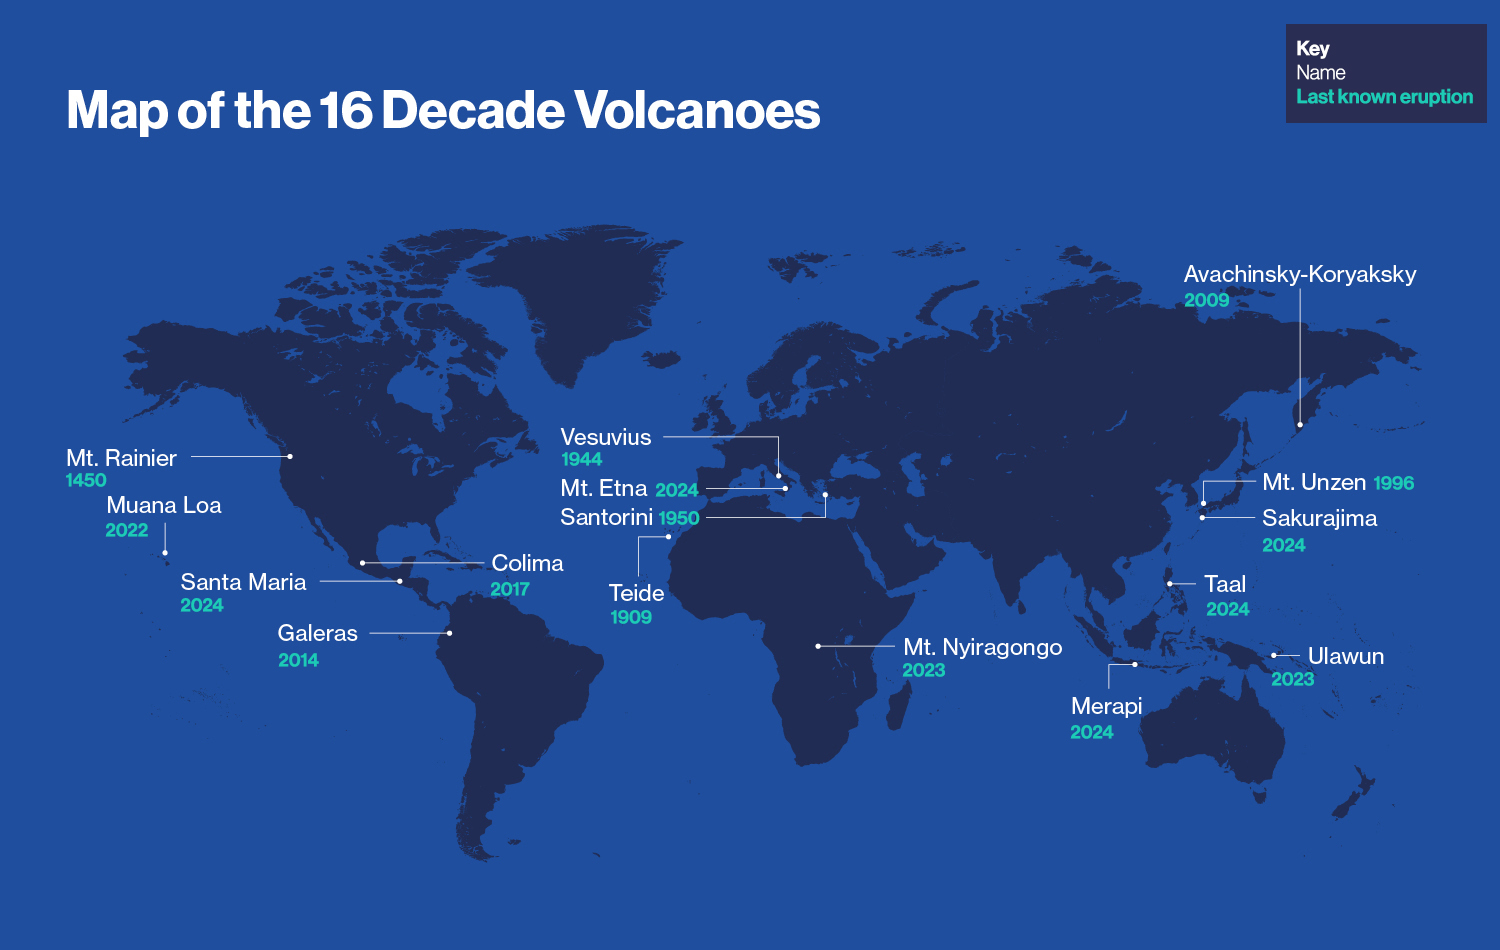 The sixteen decade volcanoes and their last known eruption: Mount Rainier – 1450, Muana Loa – 2022, Santa Maria – 2024, Galeras – 2014, Colima – 2017, Vesuvius – 1944, Mt. Etna – 2024, Santorini – 1950, Teide – 1909, Mt. Nyiragongo, Merapi – 2024, Avachinsky-Koryaksky – 2009, Mt. Unzen – 1996, Sakurajima – 2024. Taal – 2024, Ulawun - 2023.